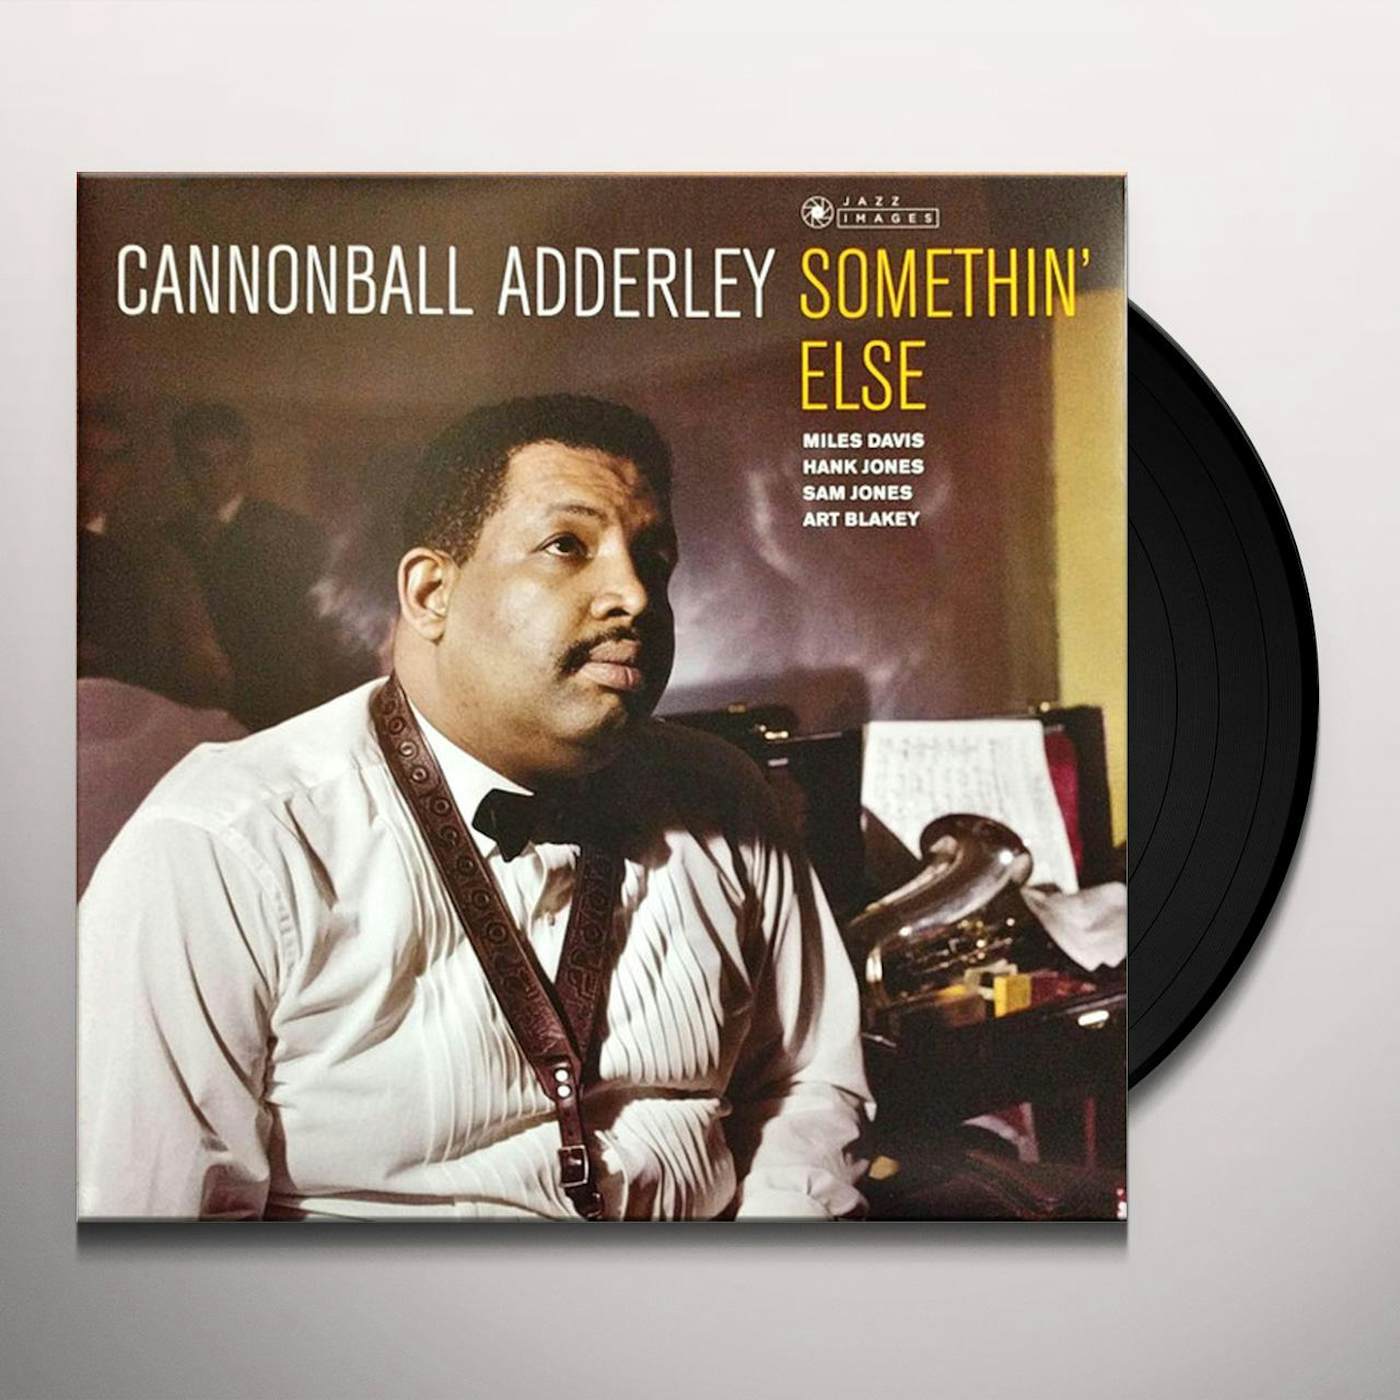 Cannonball Adderley SOMETHIN ELSE (COVER PHOTO BY JEAN-PIERRE LELOIR/GATEFOLD 180G EDITION) Vinyl Record